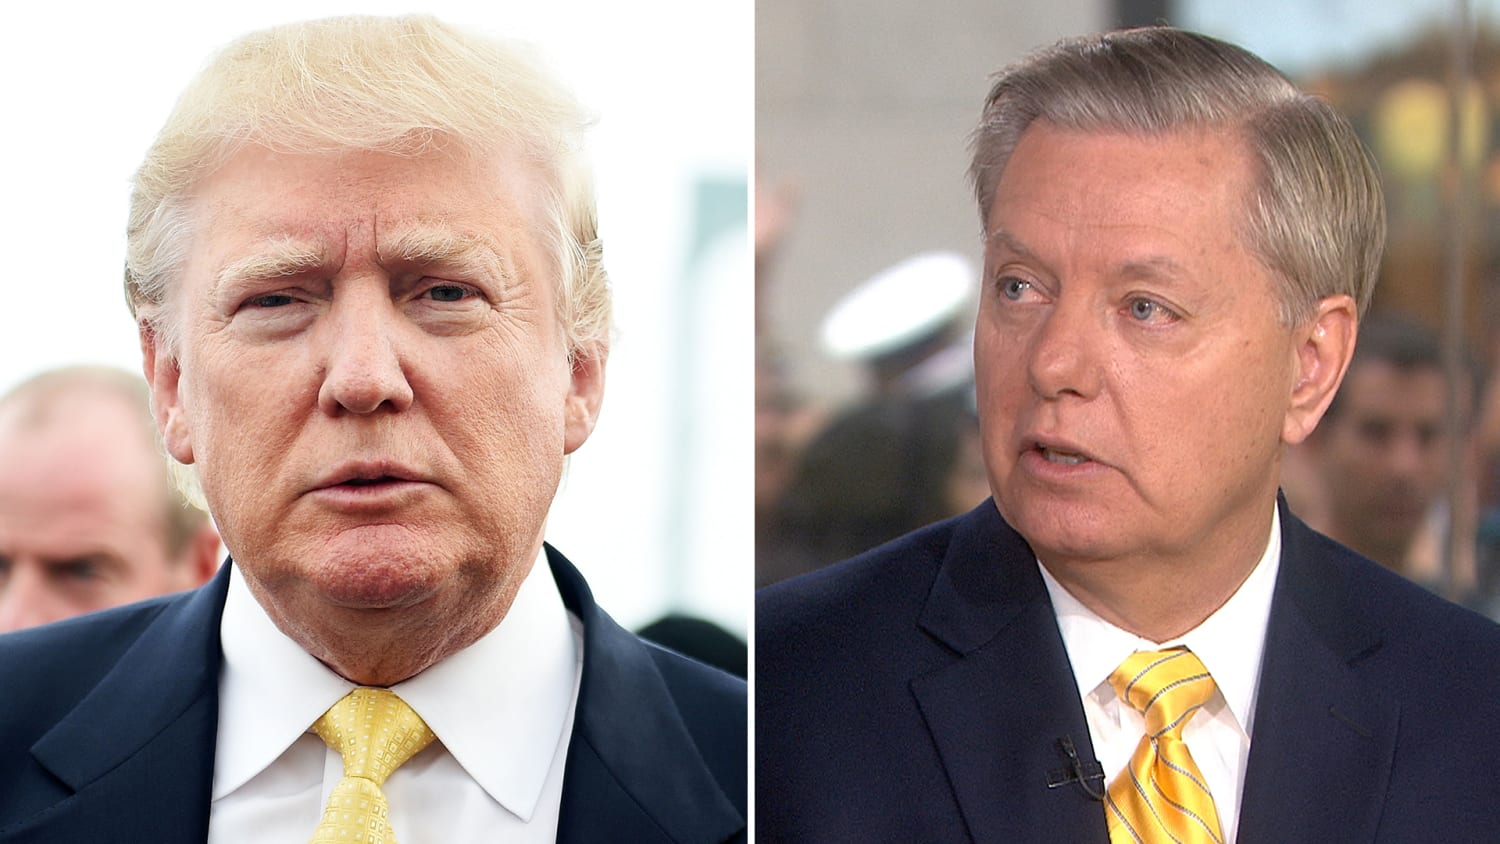 Lindsey Graham calls Donald Trump 'wrecking ball' for Republicans - TODAY.com